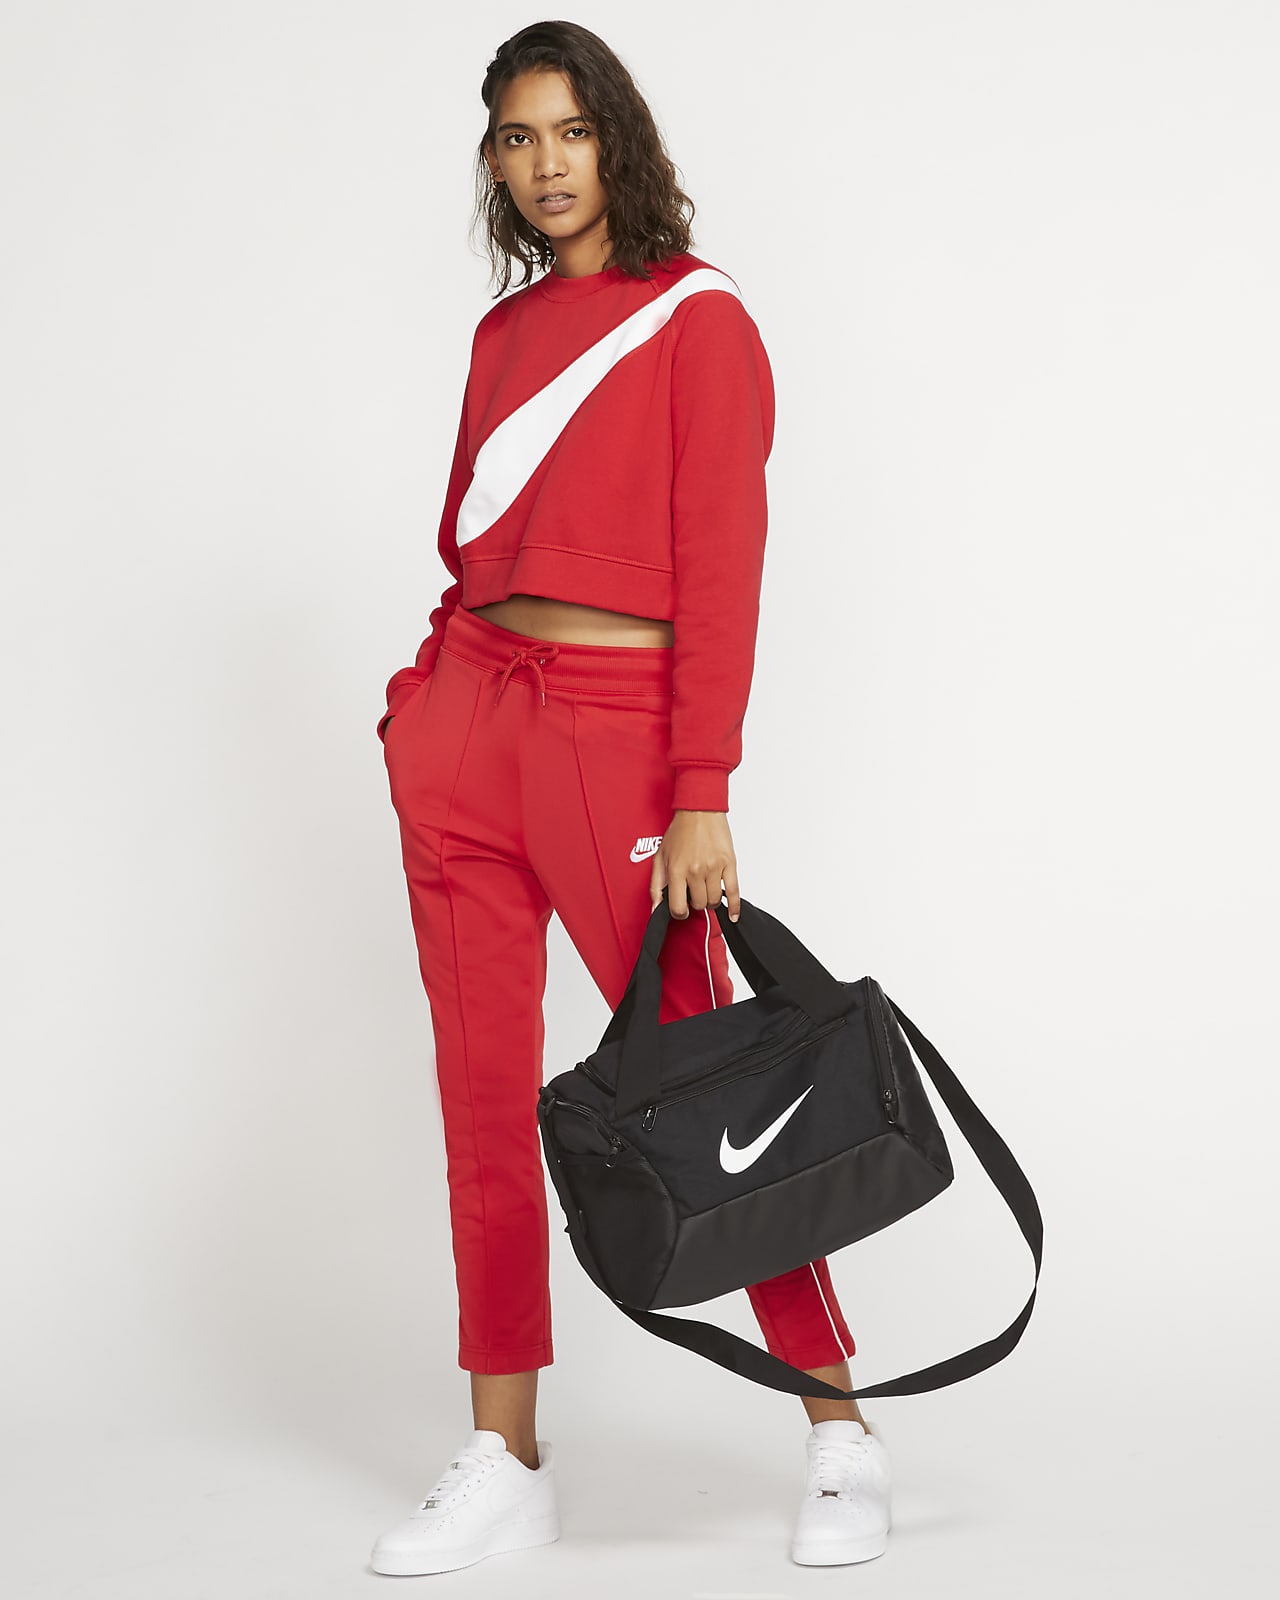 Buy Nike Brasilia Training Duffel Bag (Extra Small, 25L) 2024 Online